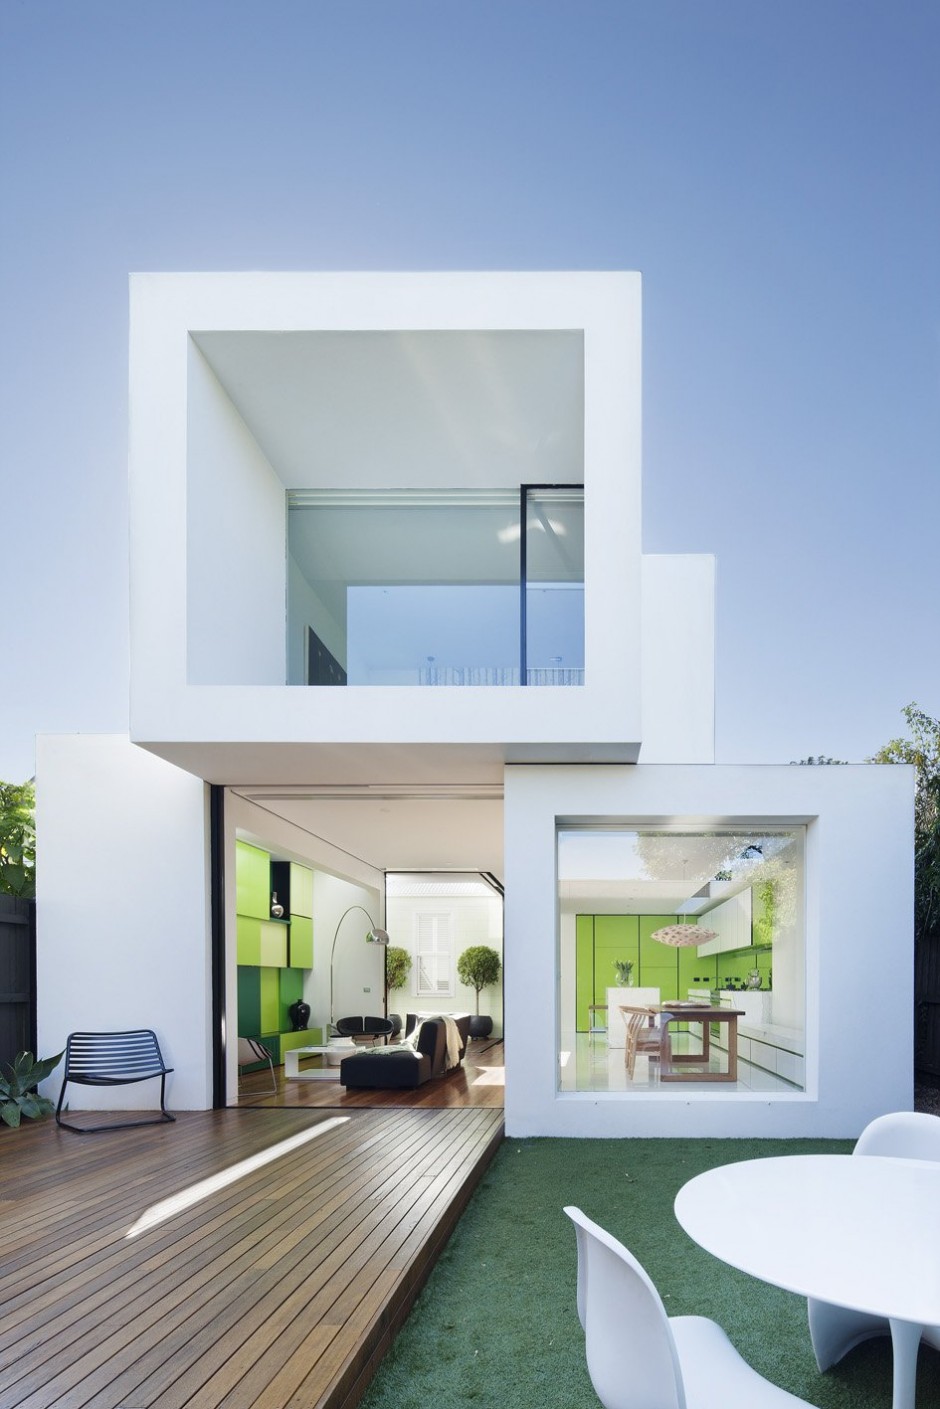 Small Minimalist Home With Creative Design  Architecture Beast